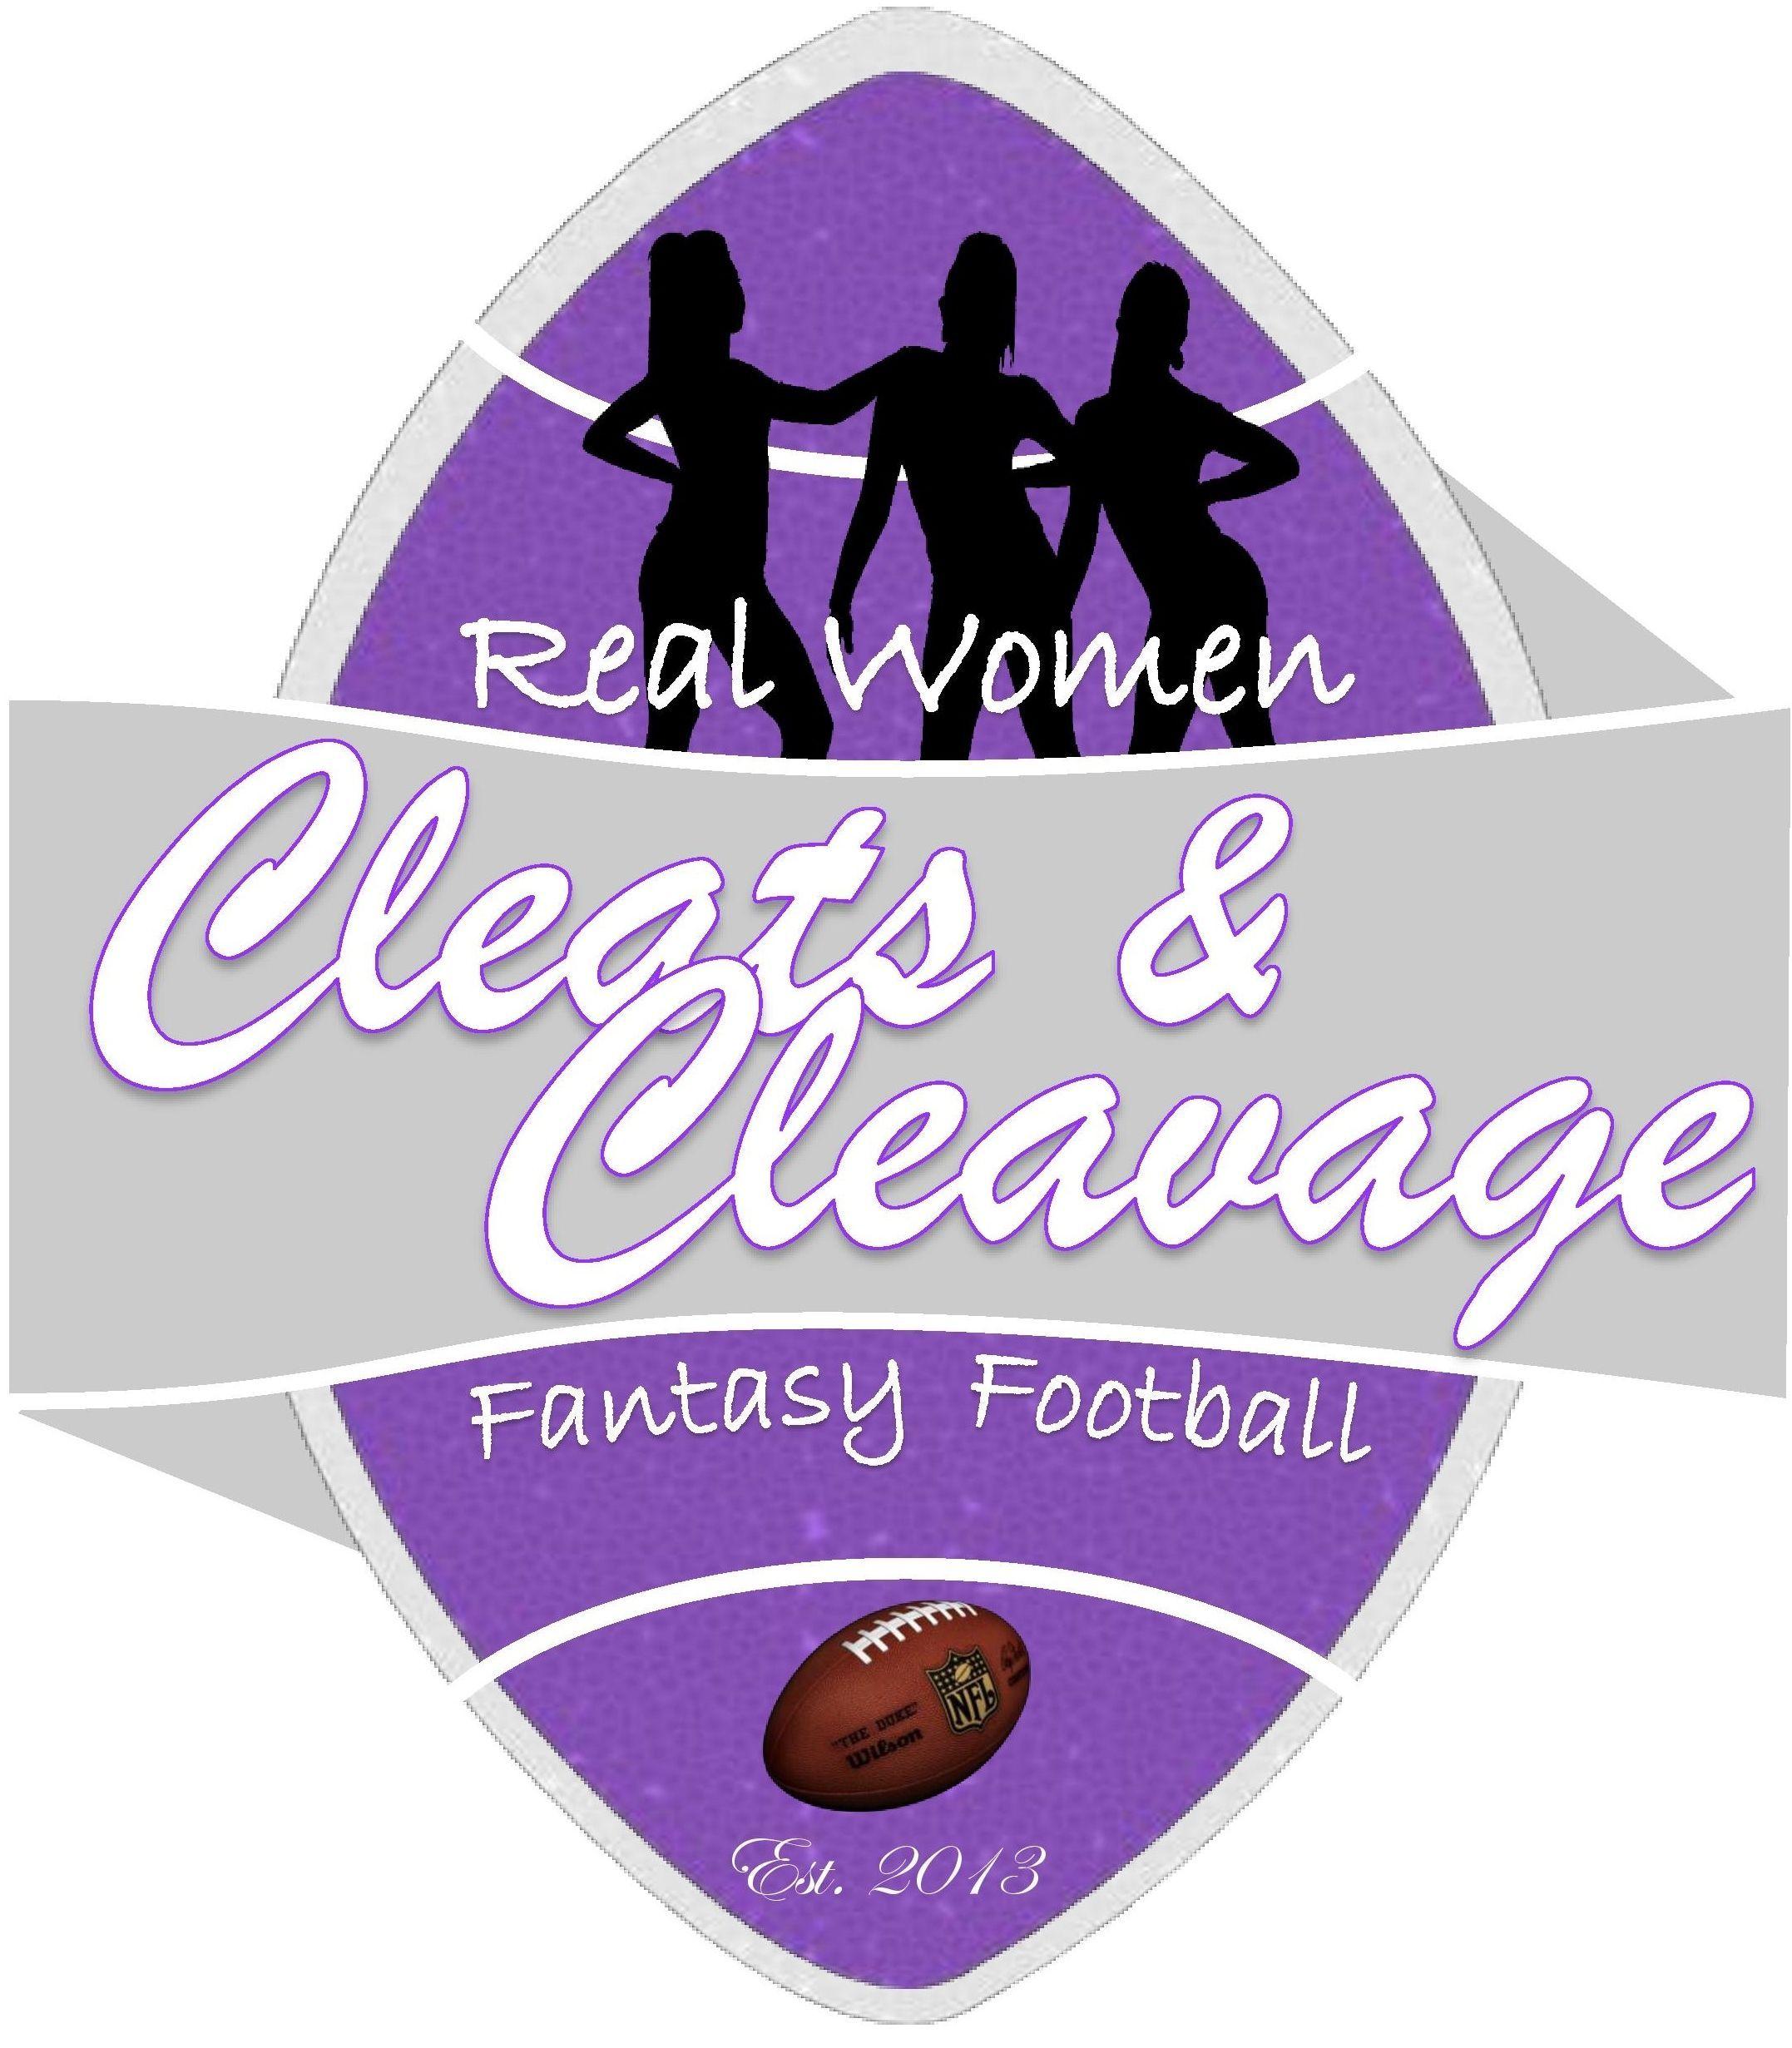 Cleats Logo - Logo Cleats & Cleavage Girls Fantasy Football League. Dashing